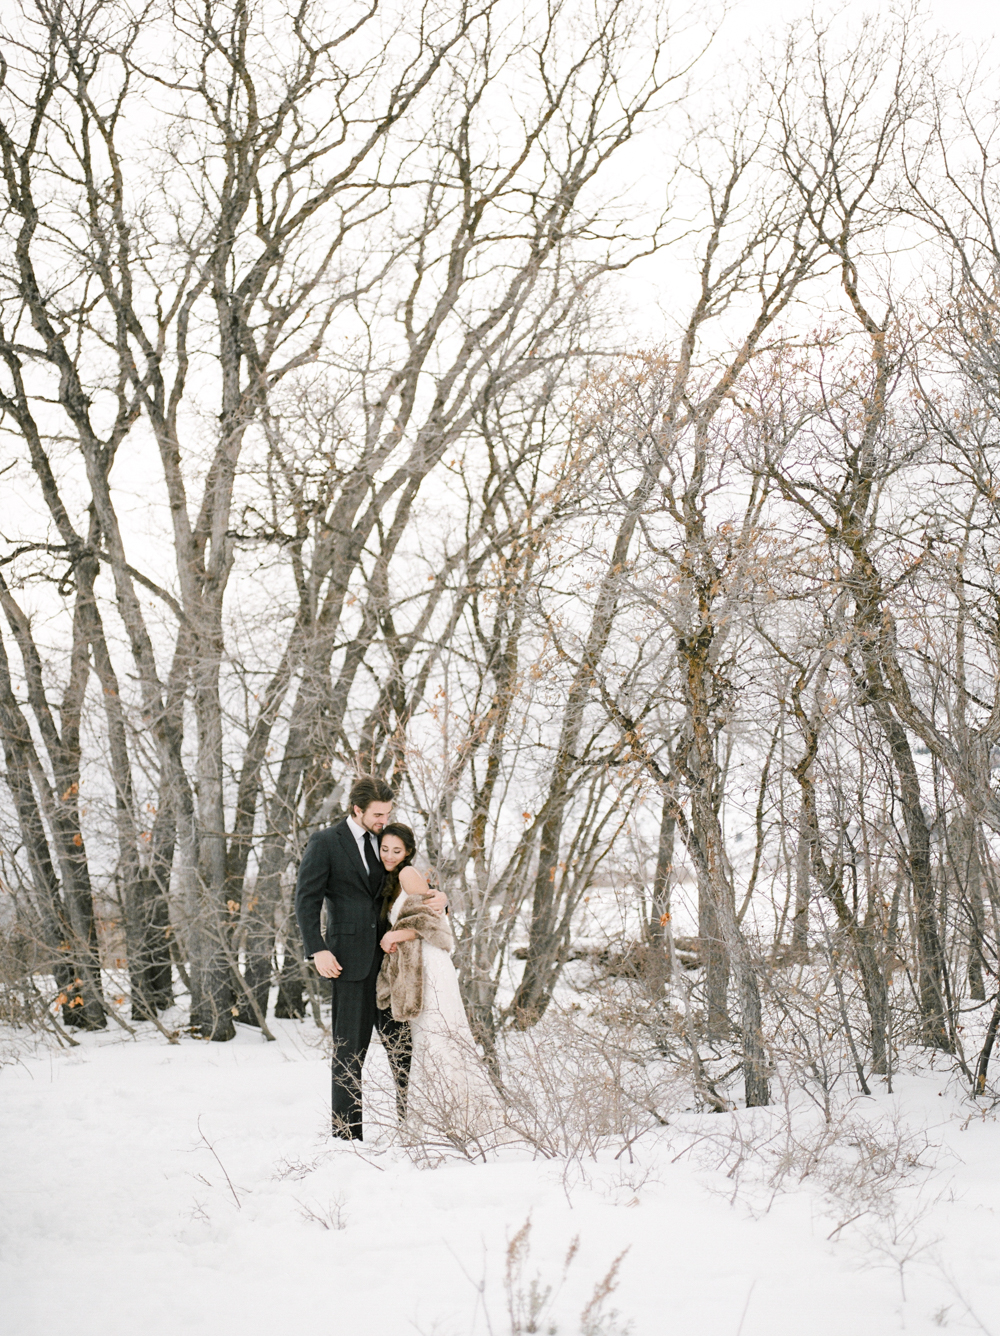 Christine-Gosch-Utah-film-photographer-wedding-mountains-snow-snowy-destination-8.jpg